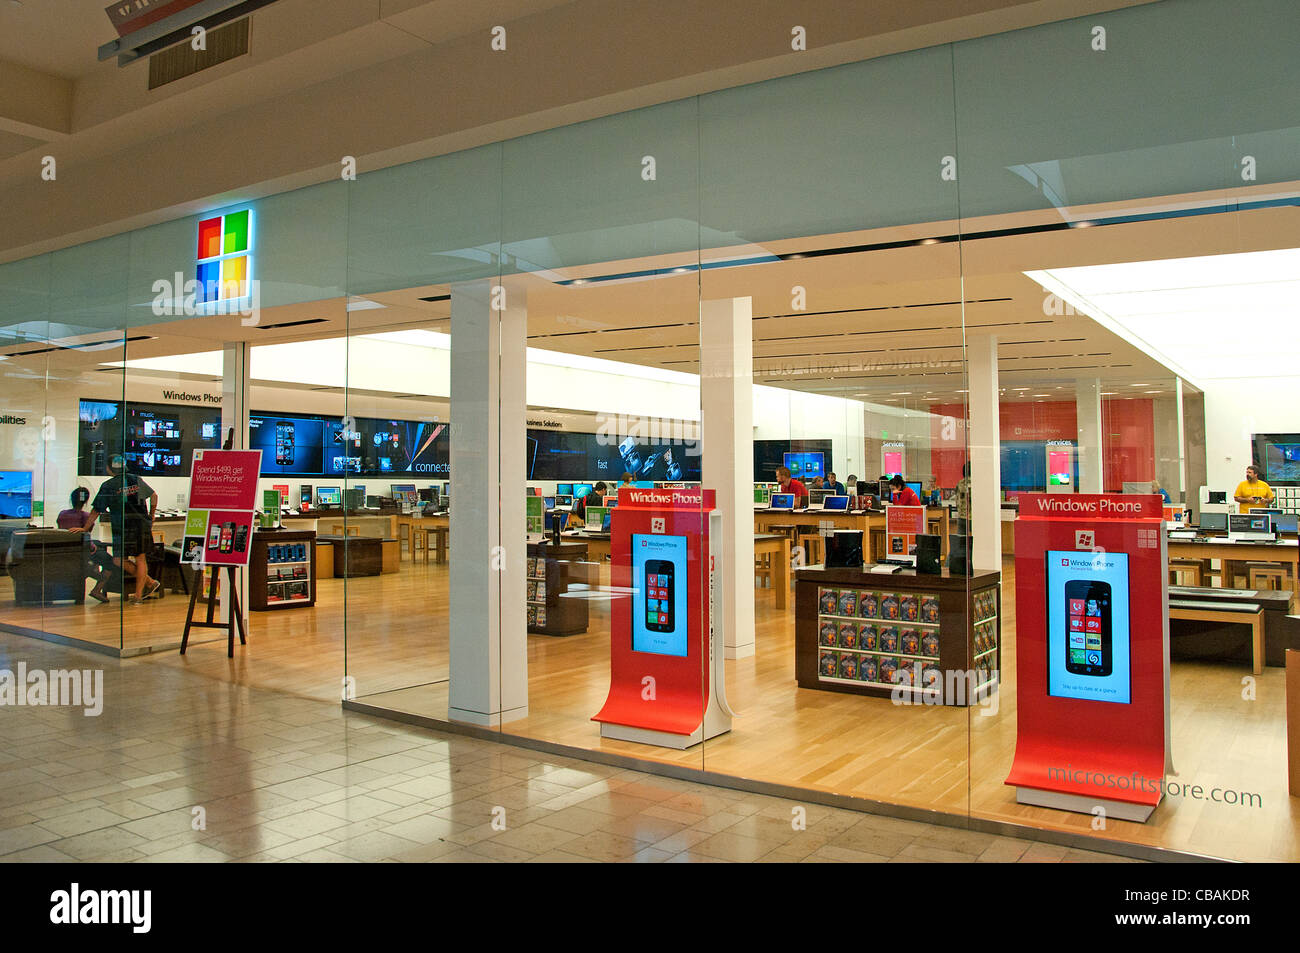 Microsoft Windows Phone Shopping Mall Shop speichern Computer Telefon Vereinigte Staaten Stockfoto